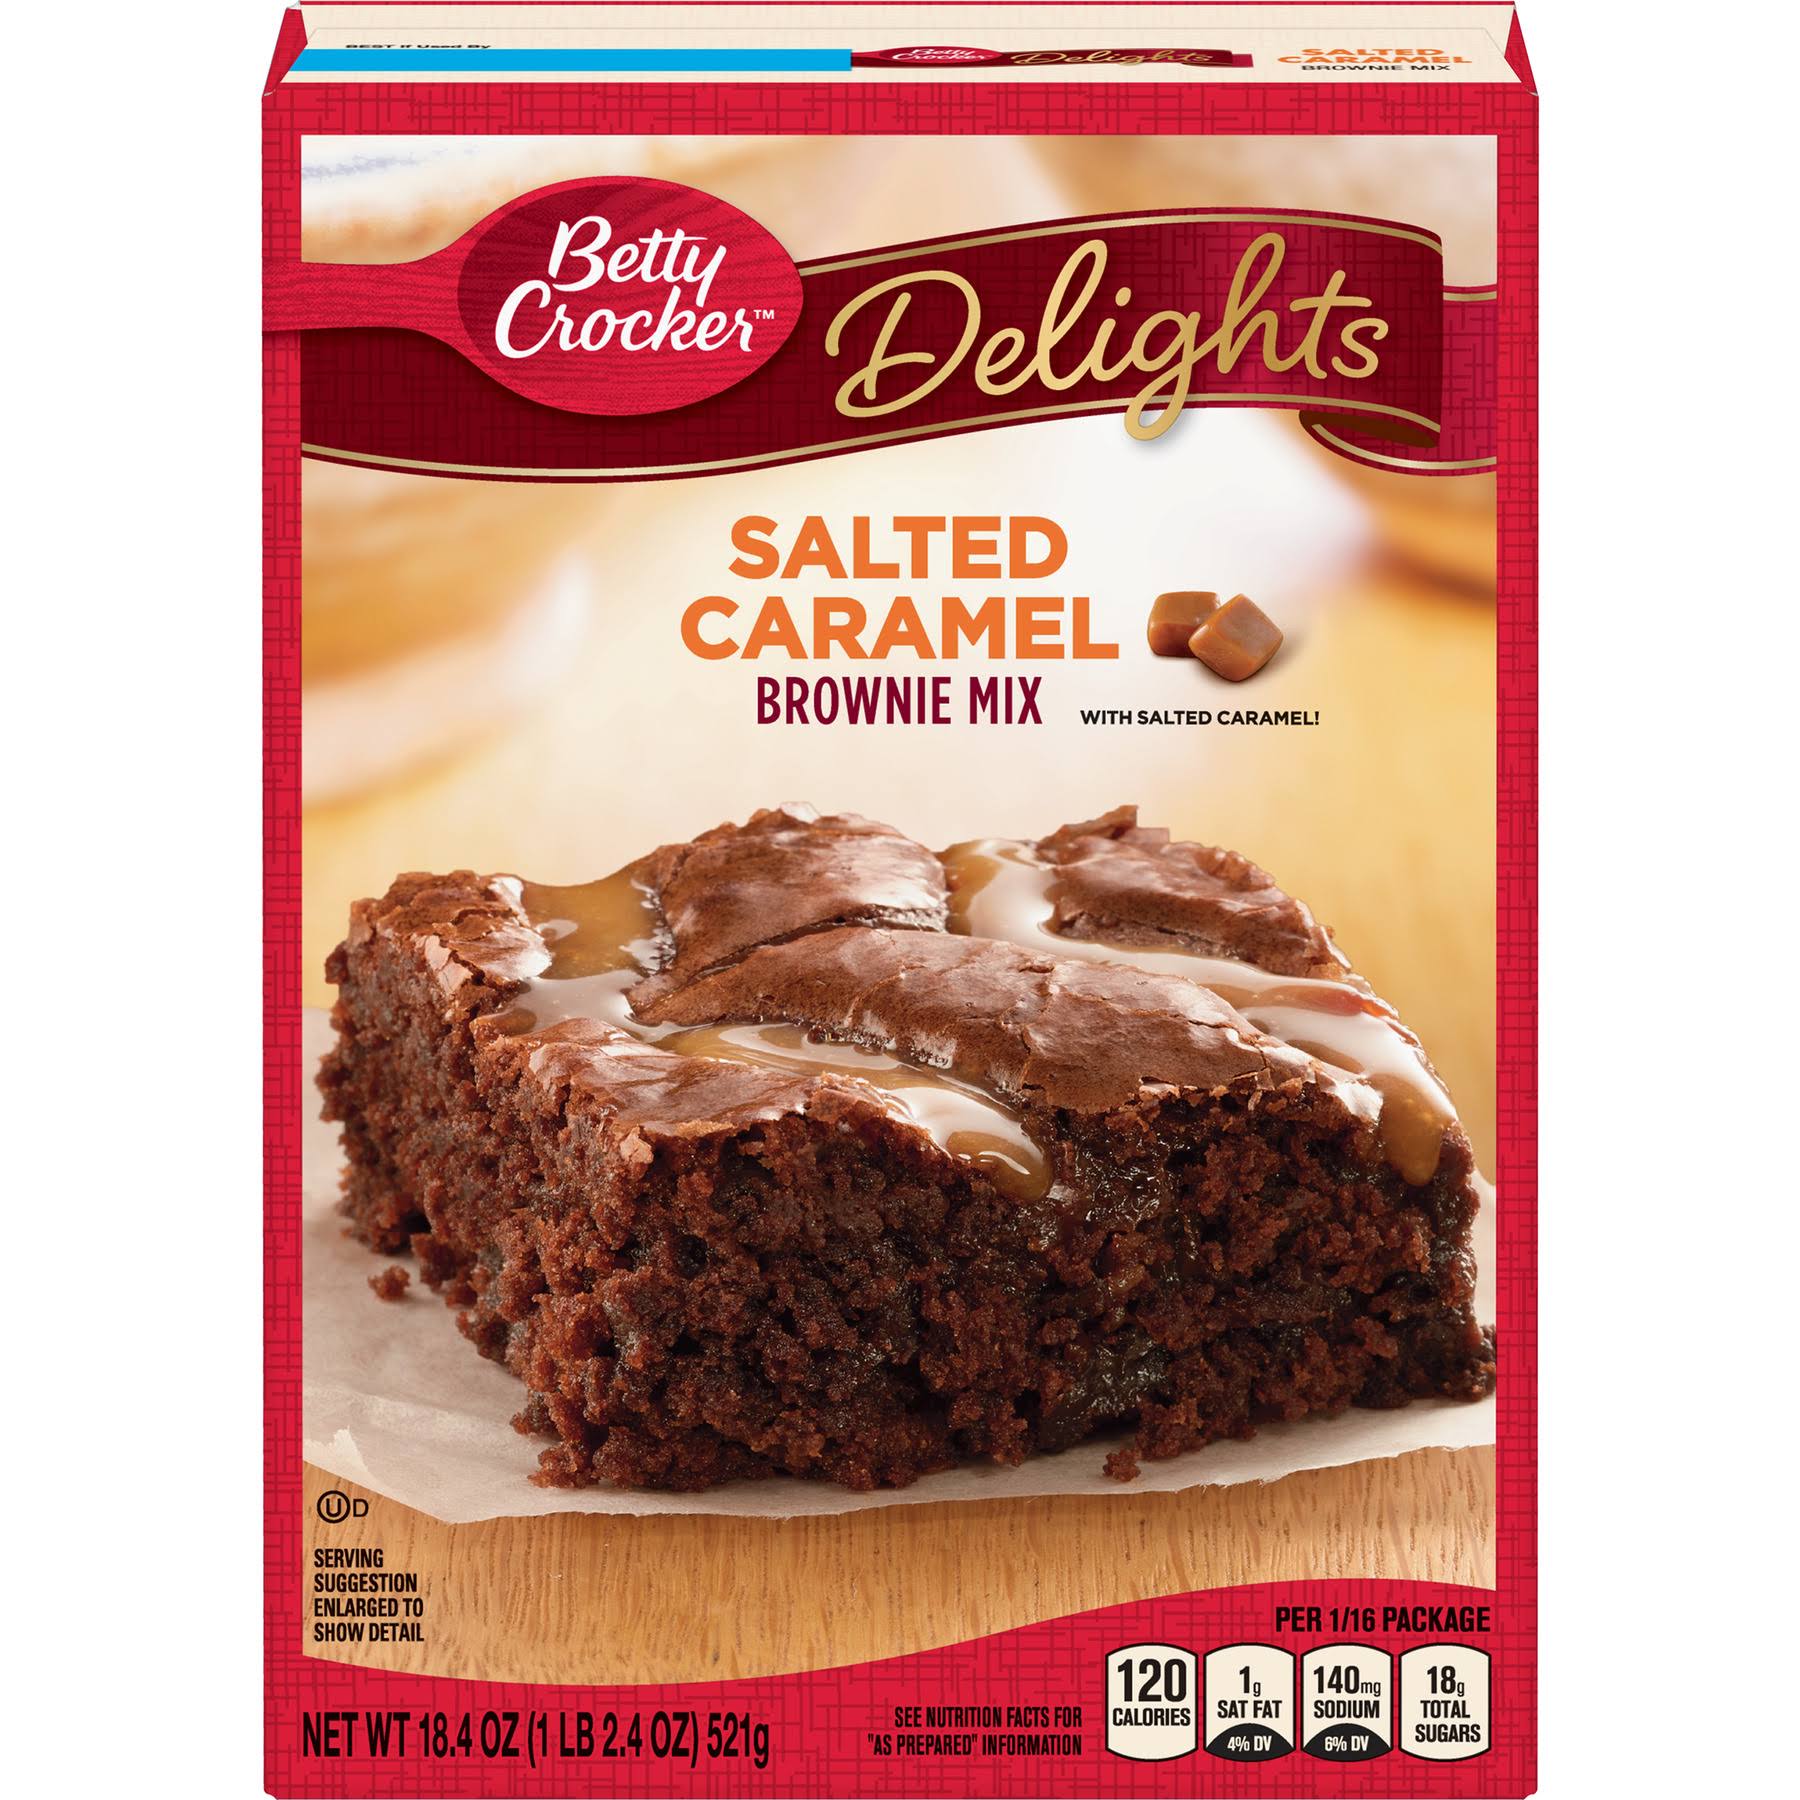 Betty Crocker Delights Brownie Mix - Salted Caramel, 521g